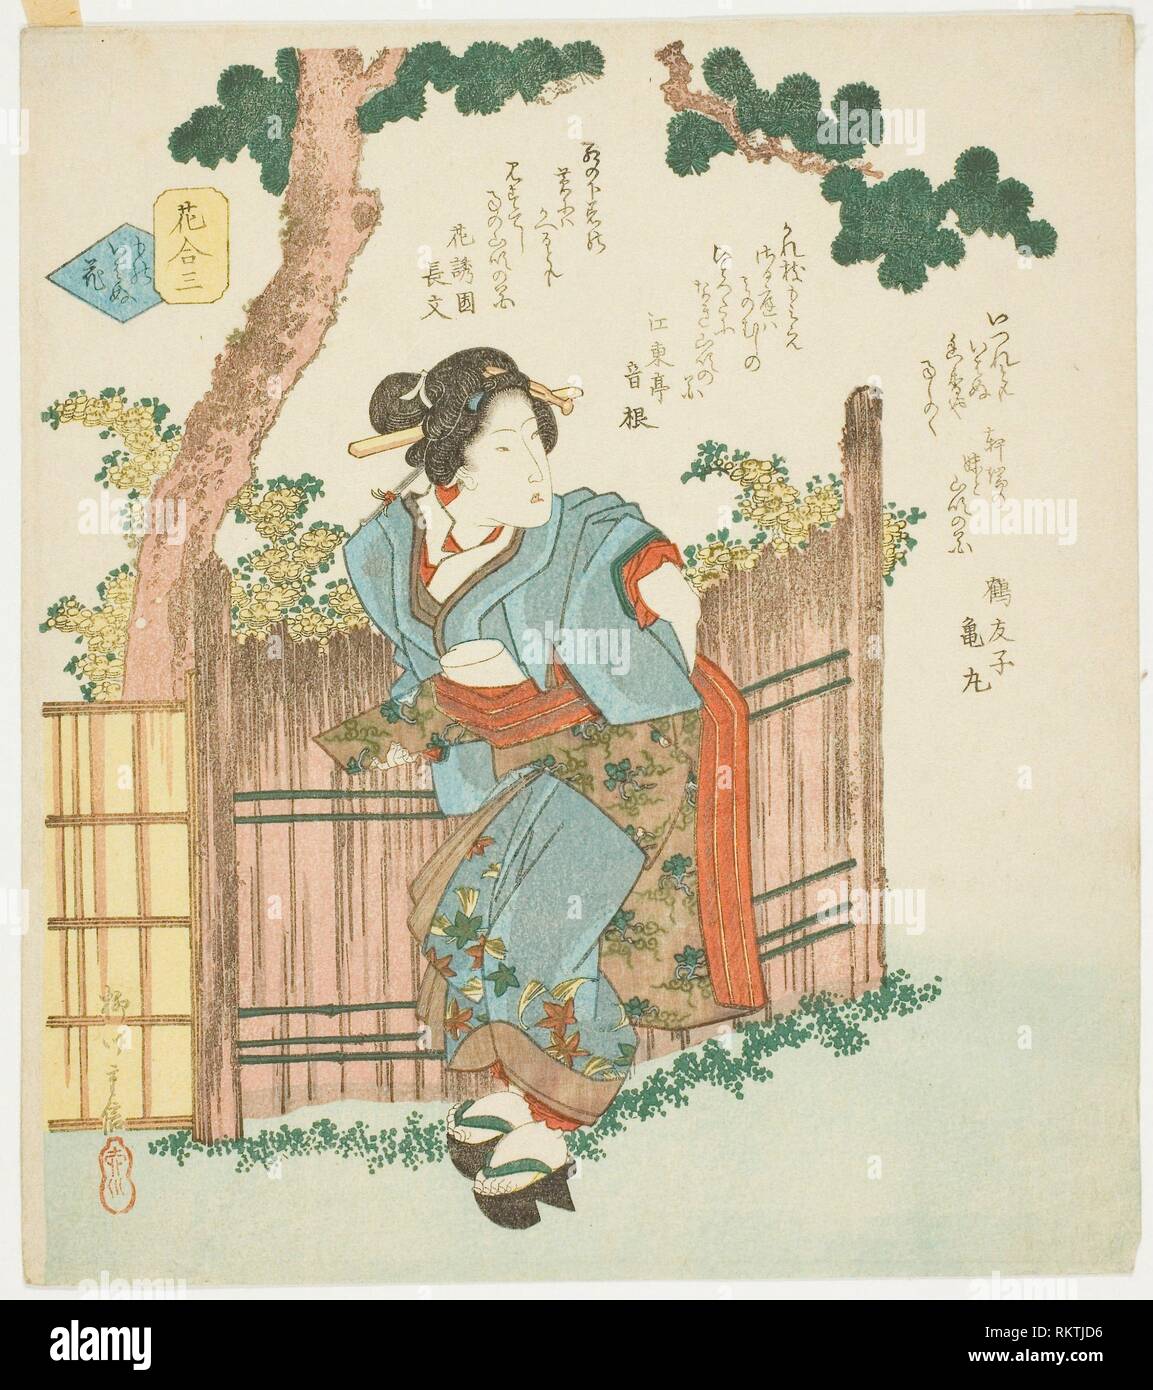 No. 3: Silent Flower (Mono iwanu hana), from the series ''A Comparison of Flowers (Hana awase)'' - late 1820s - Yanagawa Shigenobu II Japanese, Stock Photo